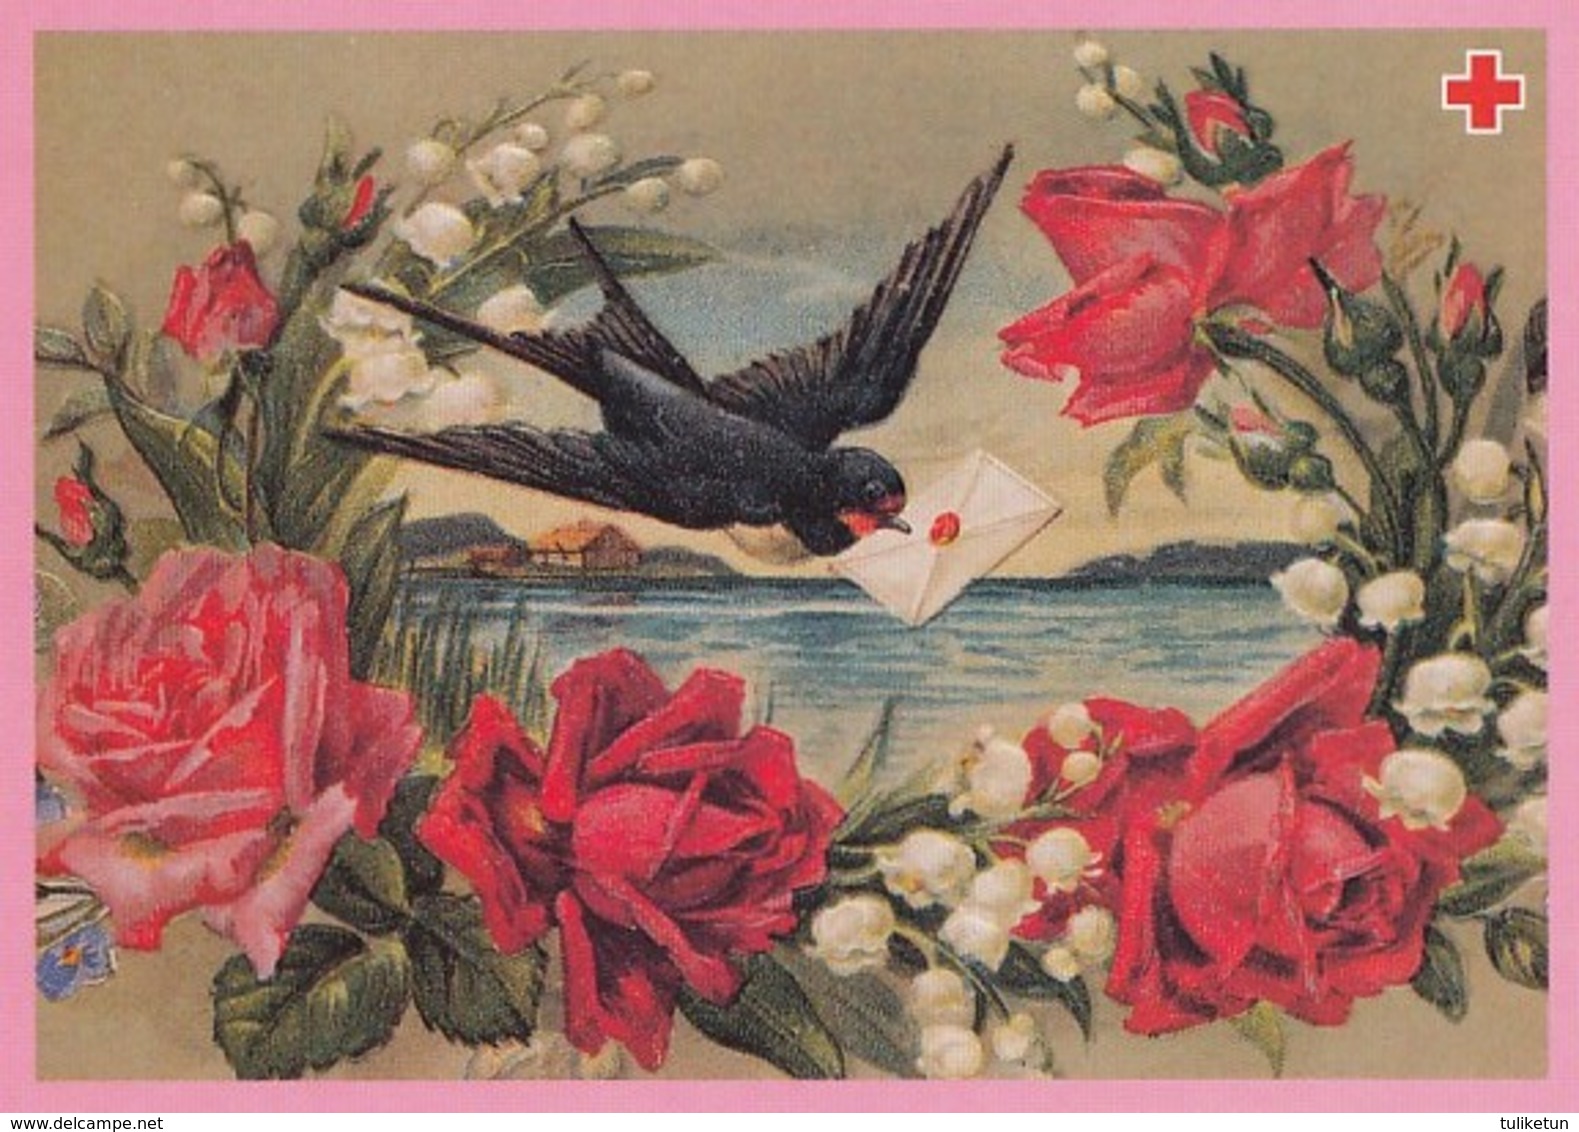 Postal Stationery - Flowers - Roses - Bird - Starling Bringing Envelope - Red Cross 2000 - Suomi Finland - Postage Paid - Interi Postali